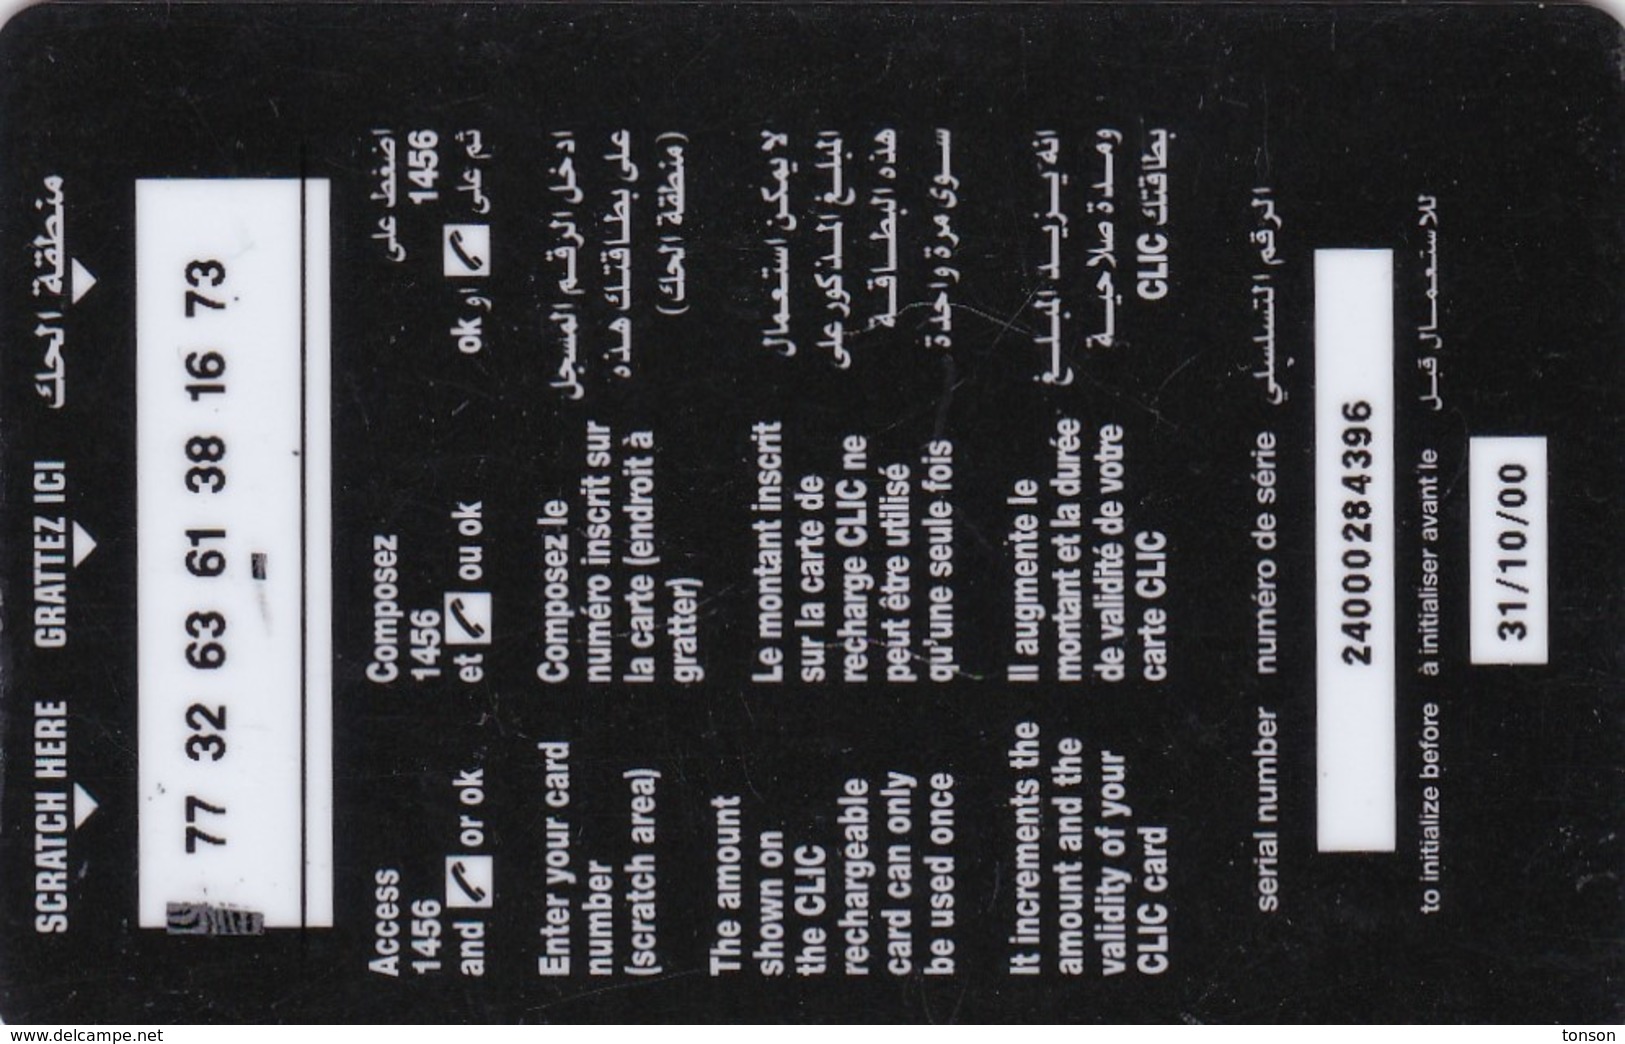 Lebanon, LB-CLC-REF-0014C, 44$, Clic Recharge Card, Family, 2 Scans.   Exp. : 31/10//00 - Libanon